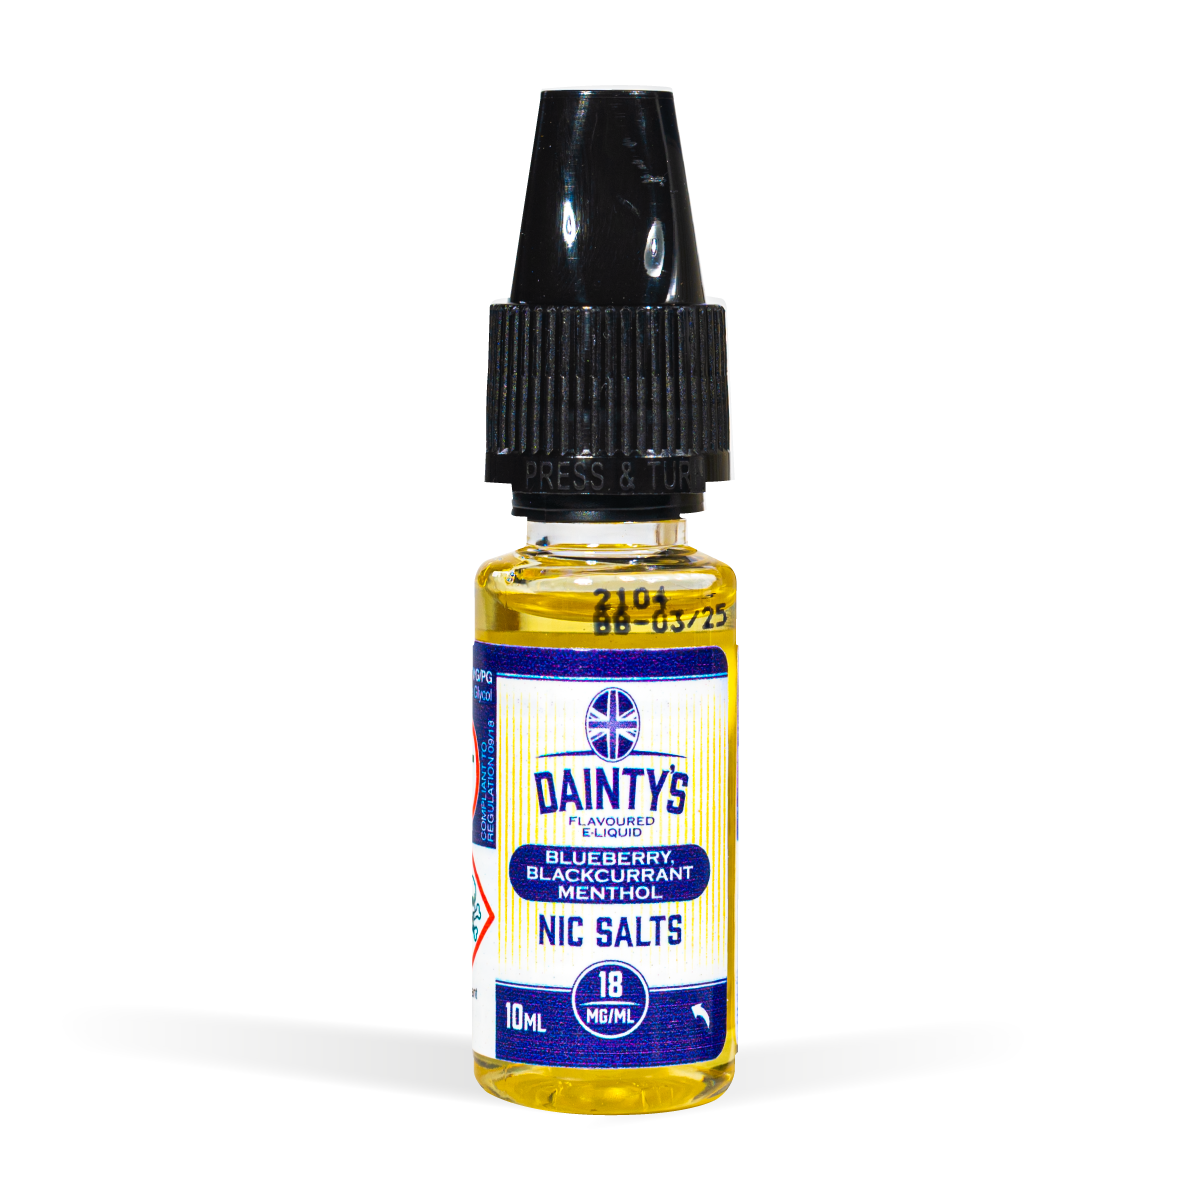 Salt Nic Blueberry Menthol & Blackcurrant, Dainty's 10ml bottle on white background